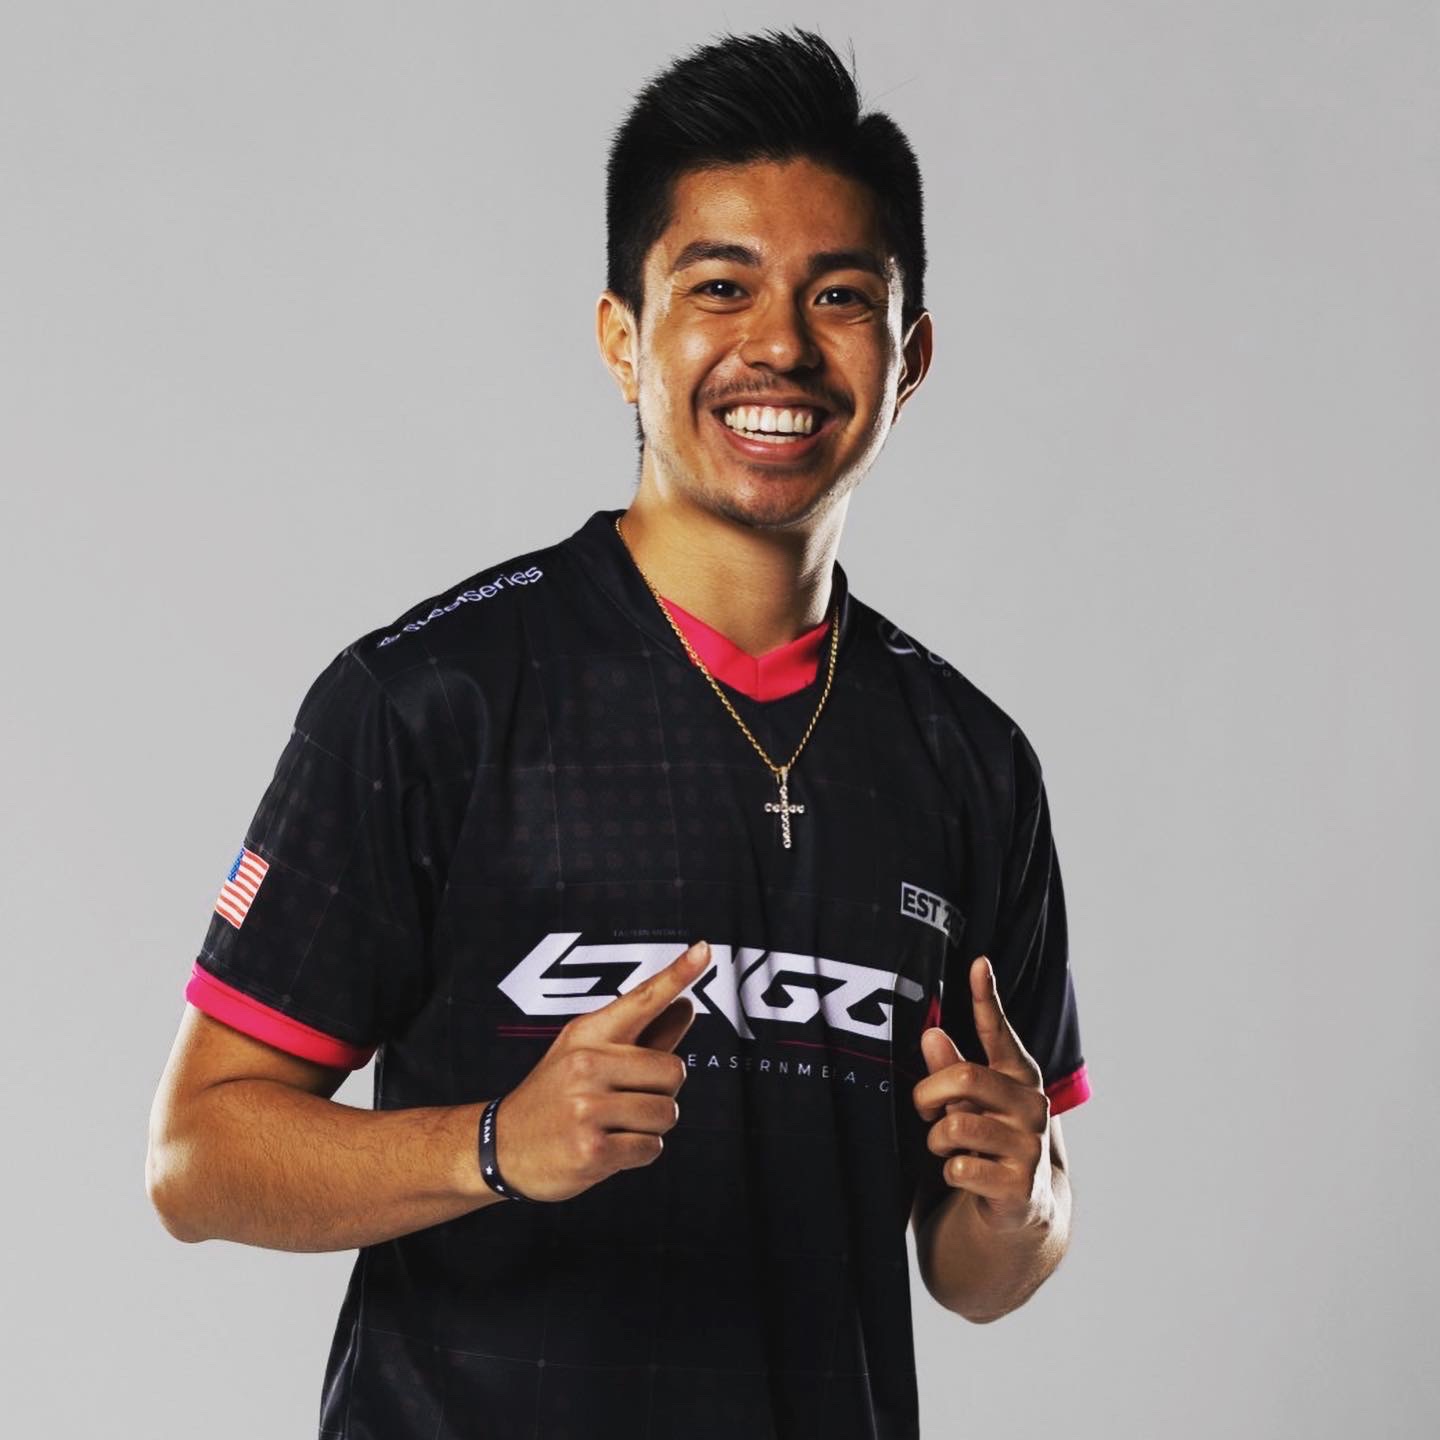 Ivan Ortega-Nguyen wears his gaming uniform